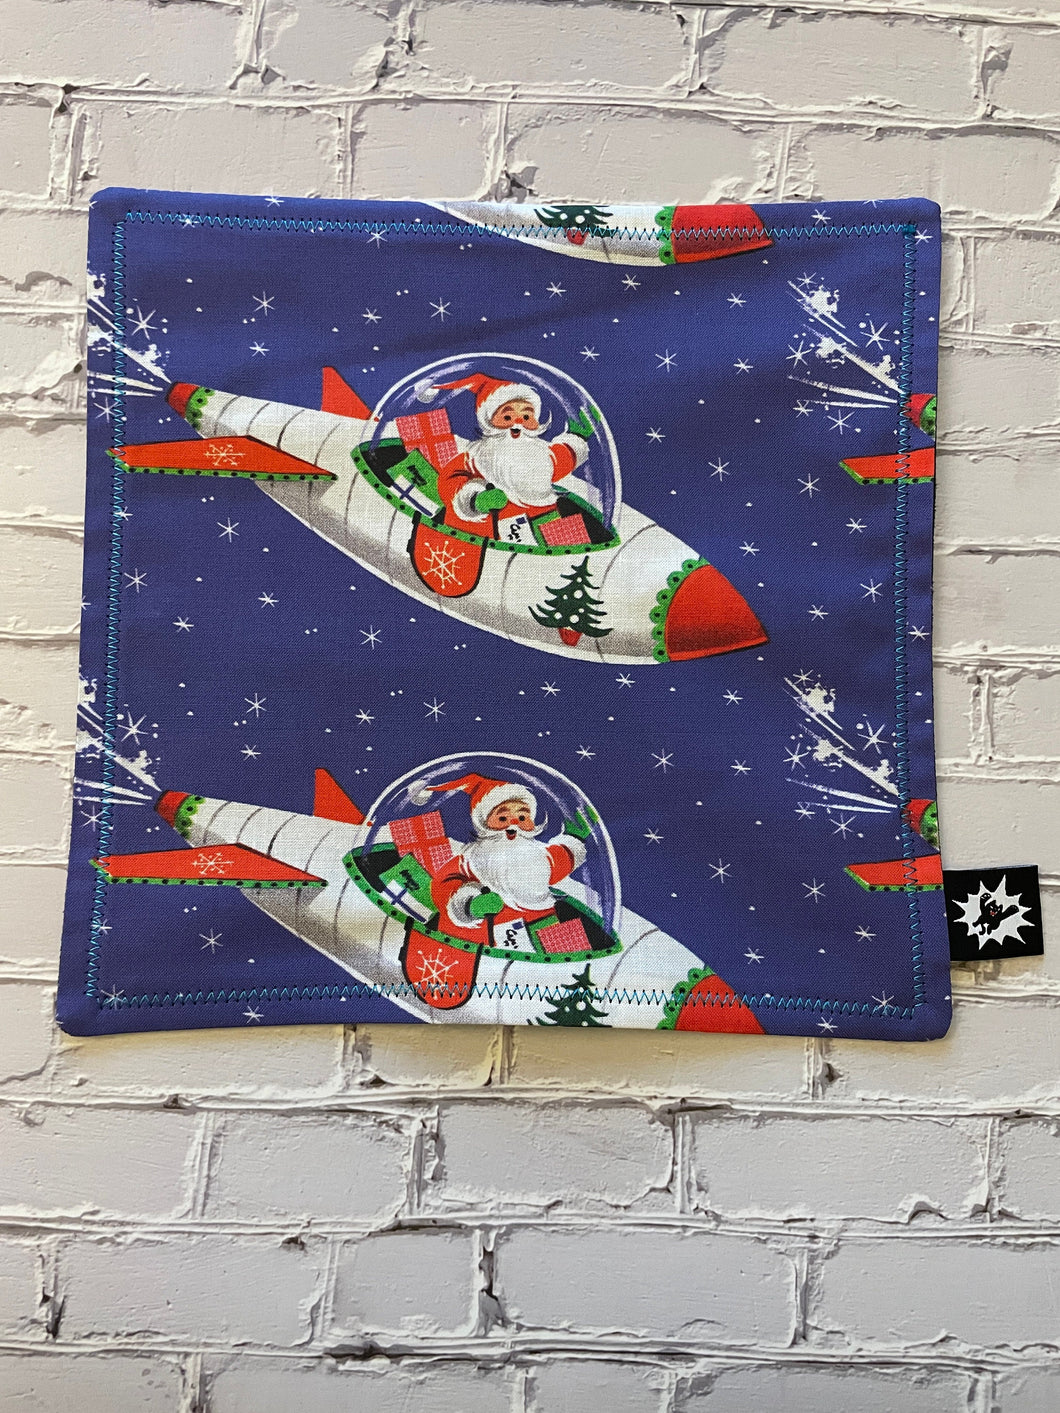 EDC Hank | Handkerchief for Every Day Carry | EDC Gear | Hank For EDC Organizer Pouch | Spaceship Santa  | Paracord | Christmas Holiday